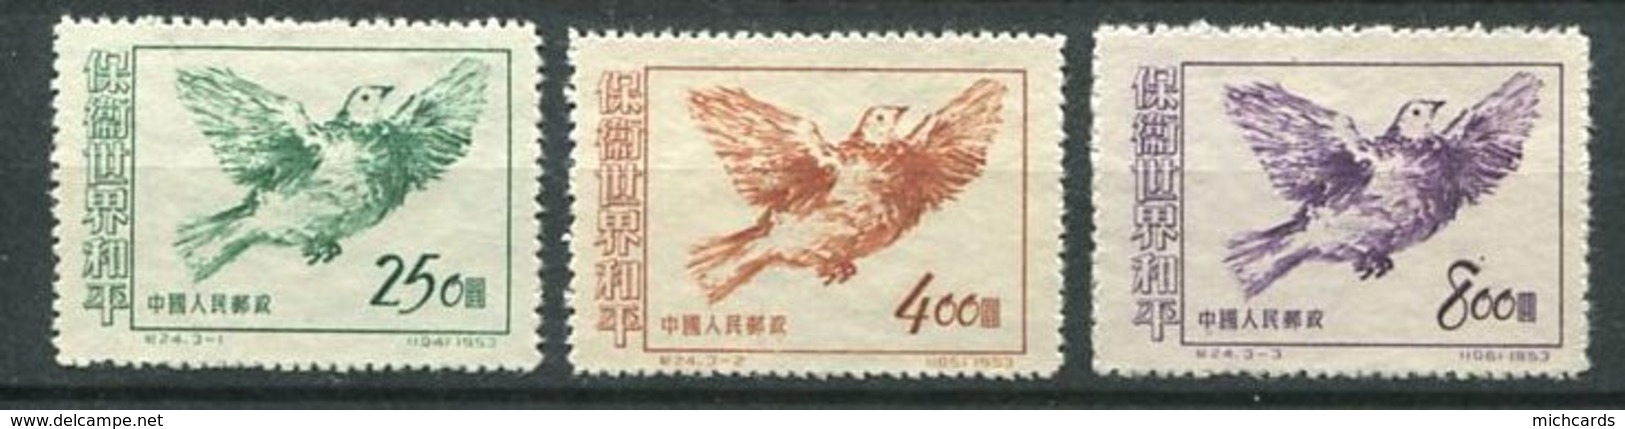 194 CHINE 1953 - Yvert 987 A/C - Oiseau -  Neuf ** (MNH) Sans Trace De Charniere - Neufs